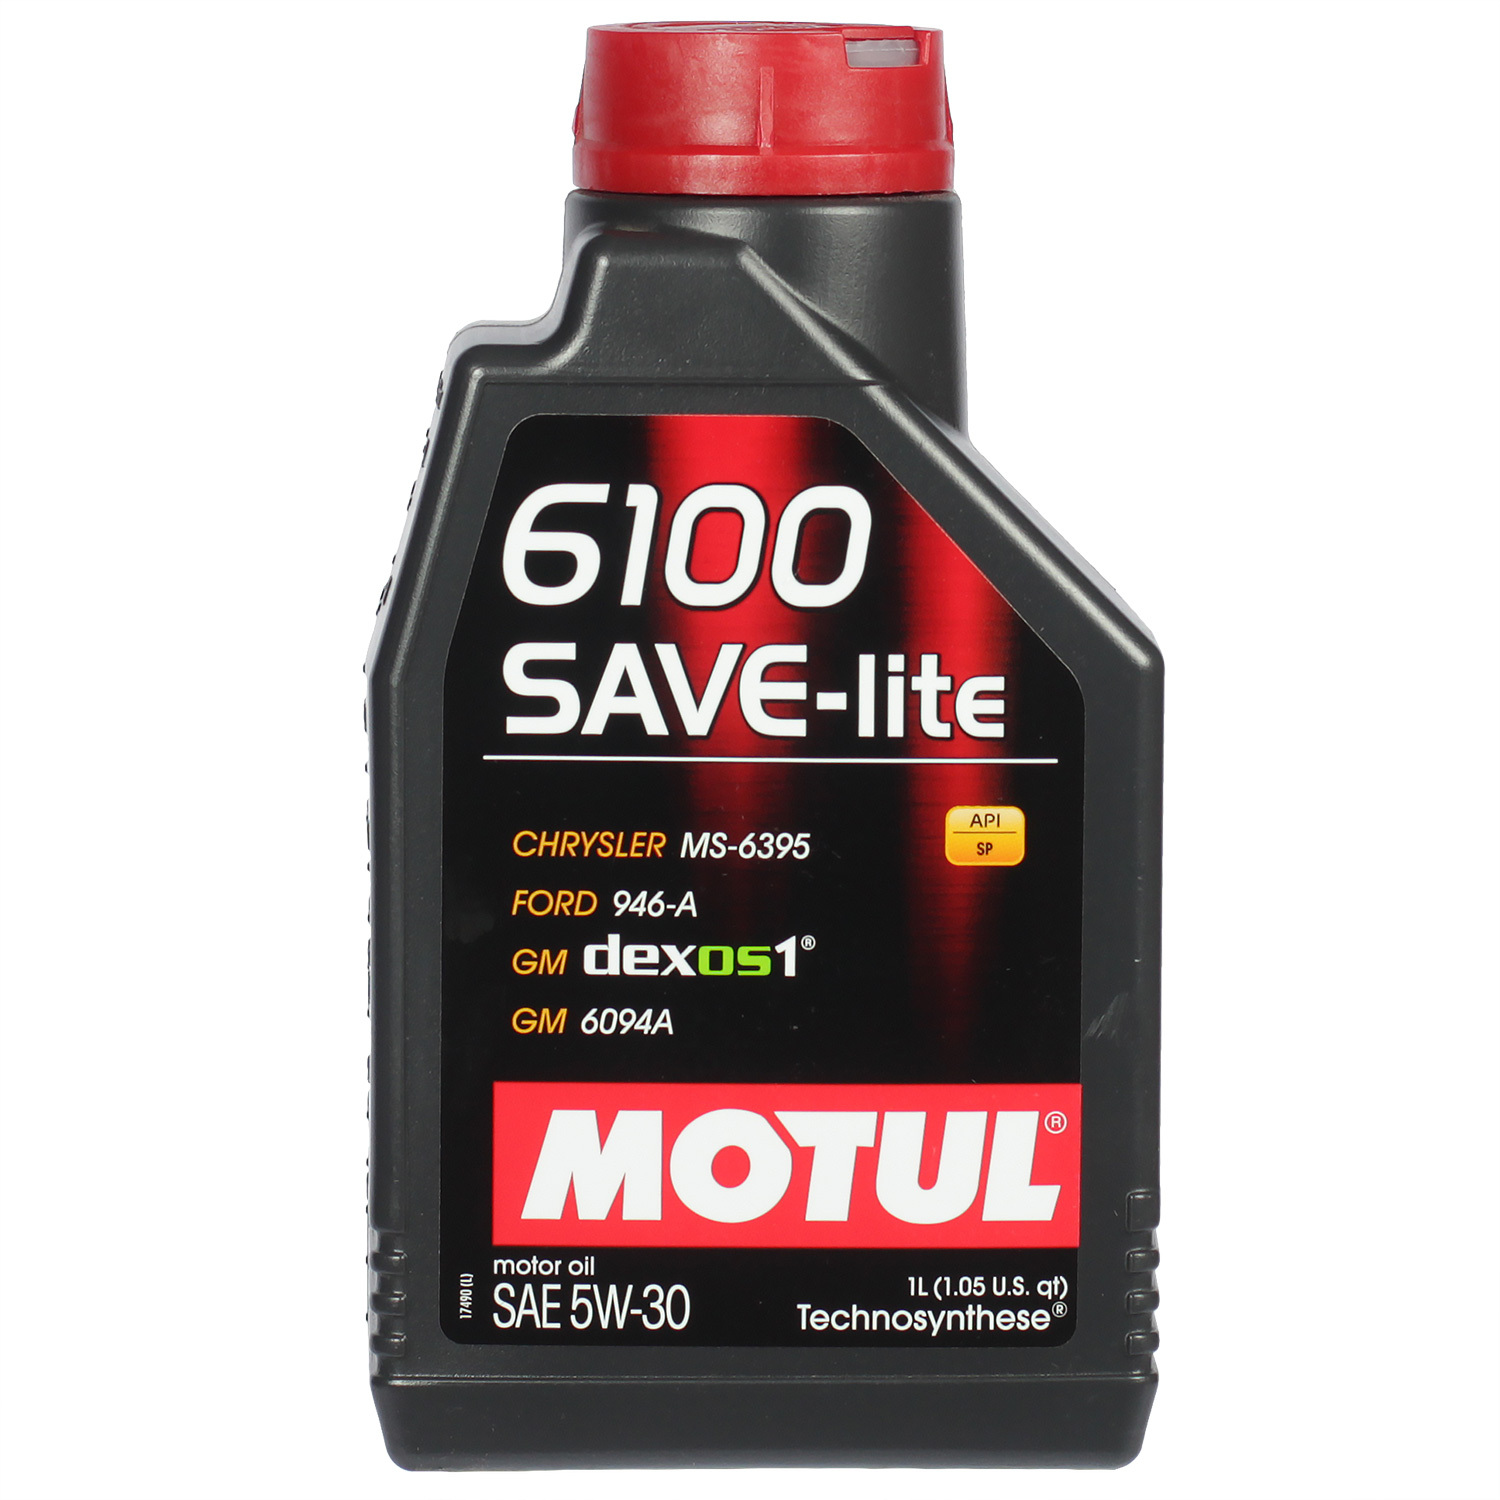 Motul Моторное масло Motul 6100 Save-lite 5W-30, 1 л motul моторное масло motul 6100 save nergy 5w 30 4 л